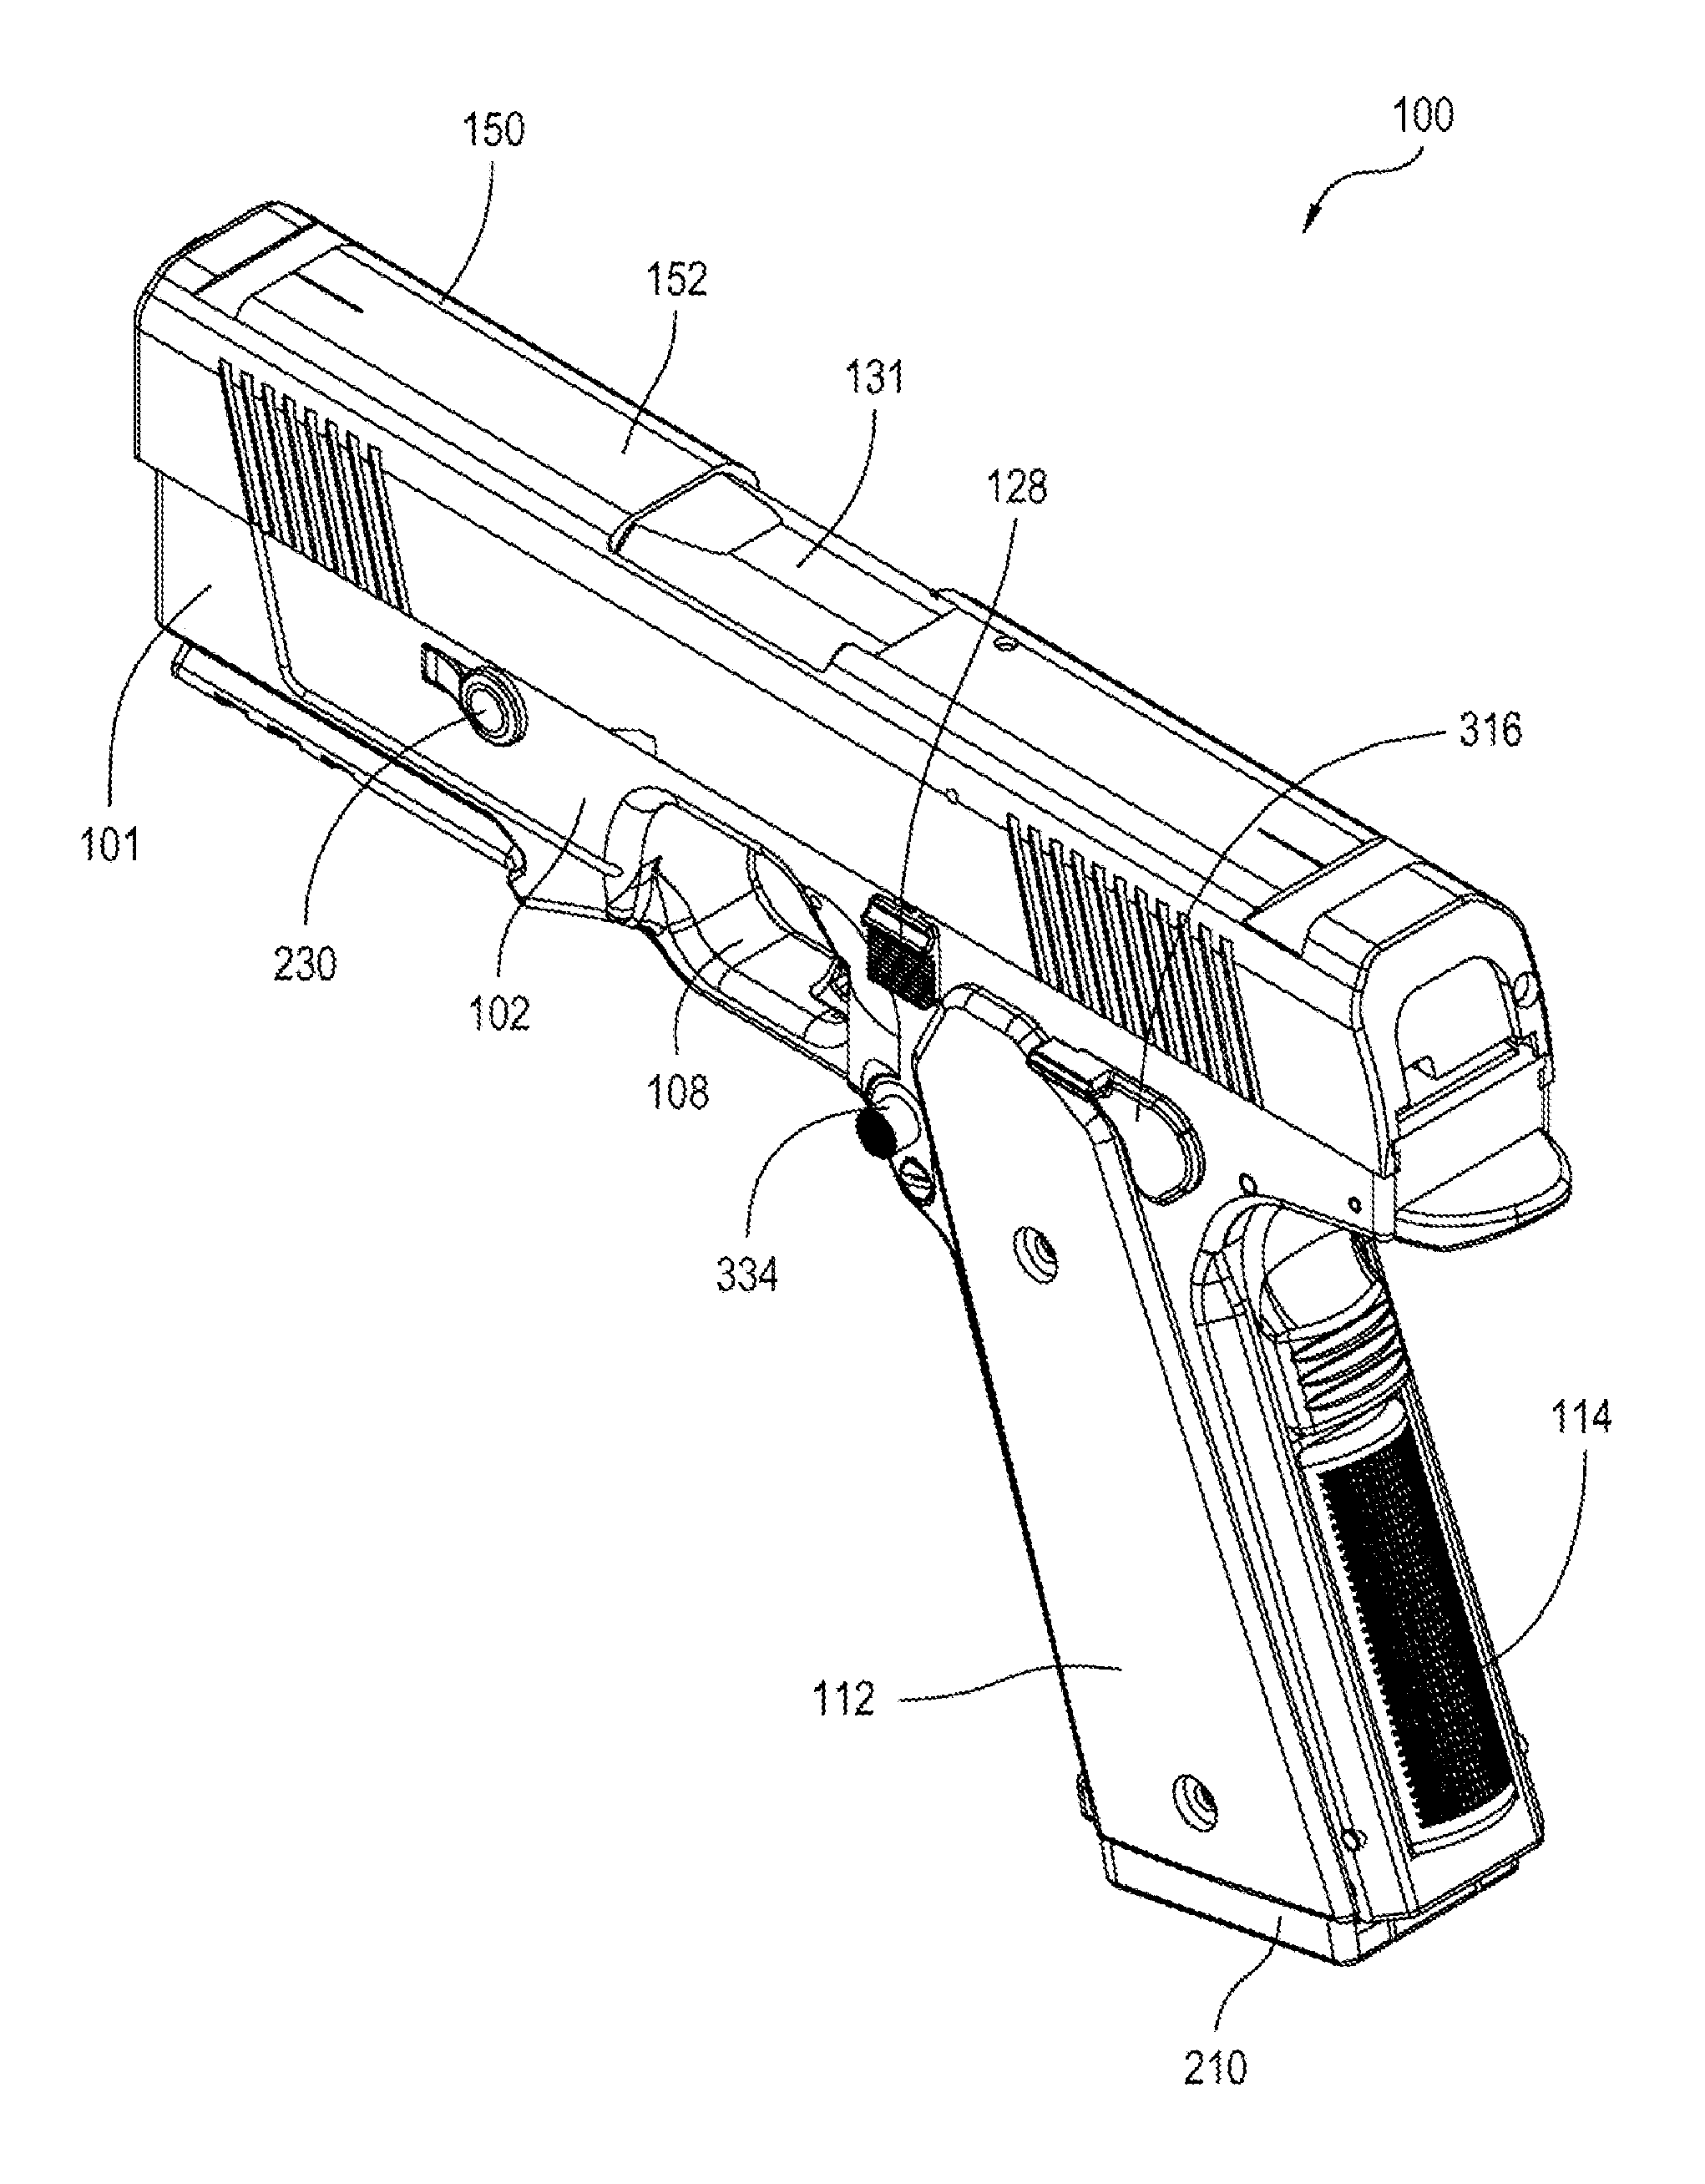 Semi-automatic pistol